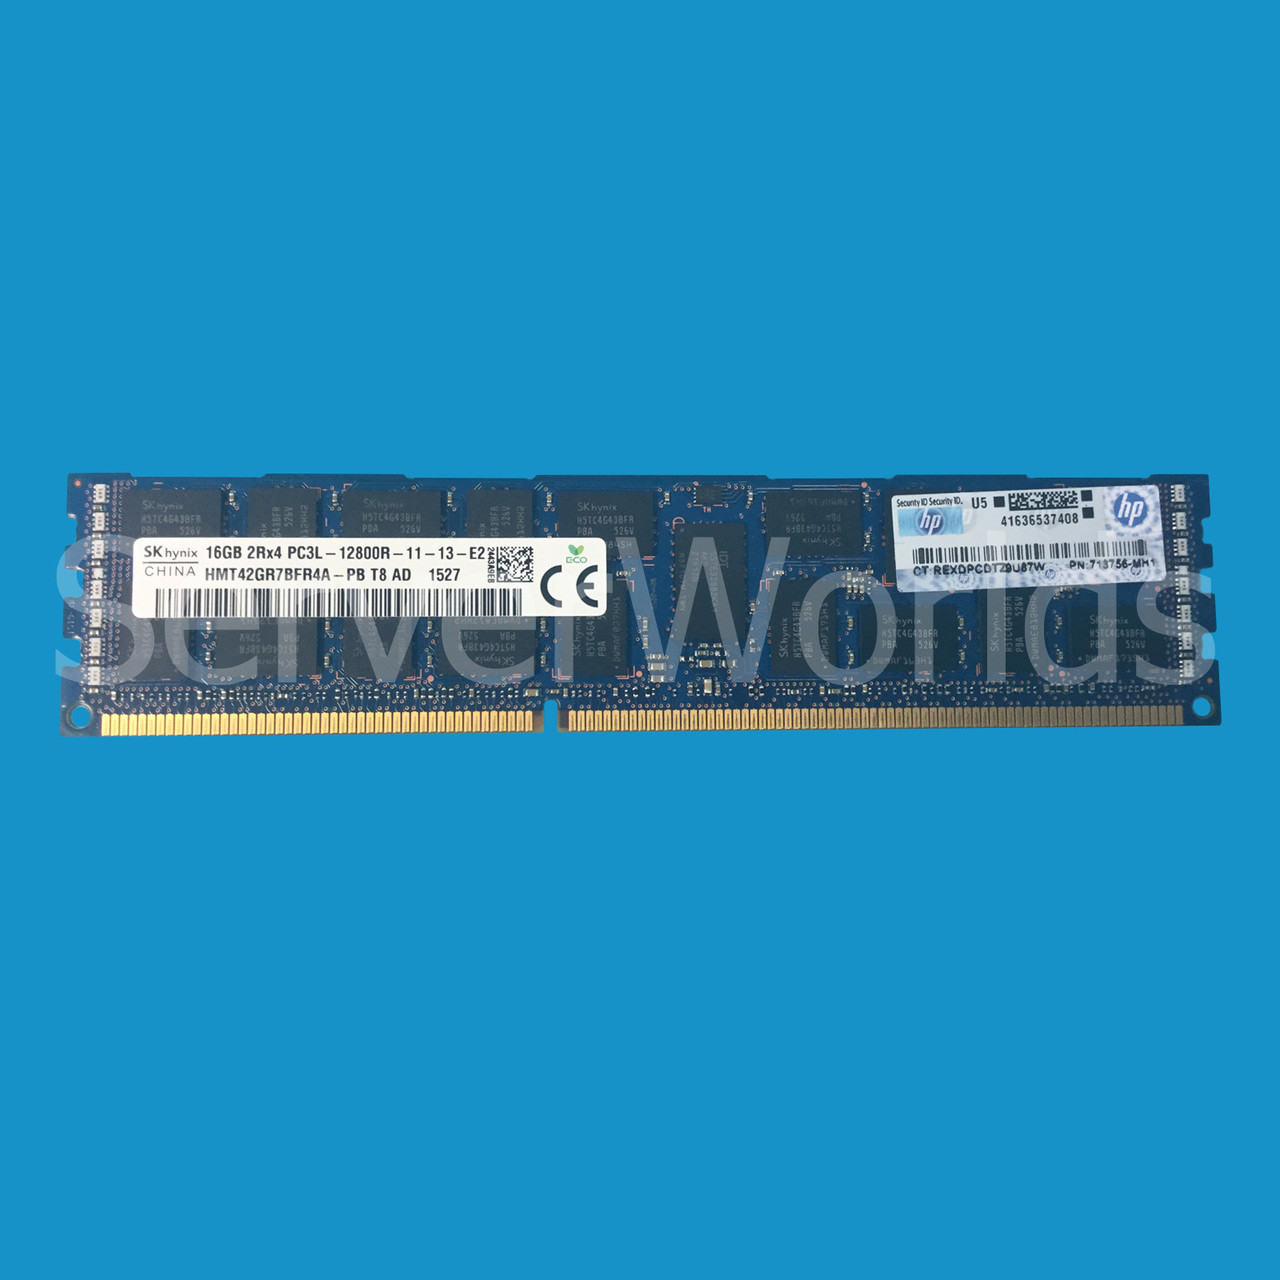 HP 713756-MH1 16GB PC3L-12800R Memory Module 804611-001, 803653-B21